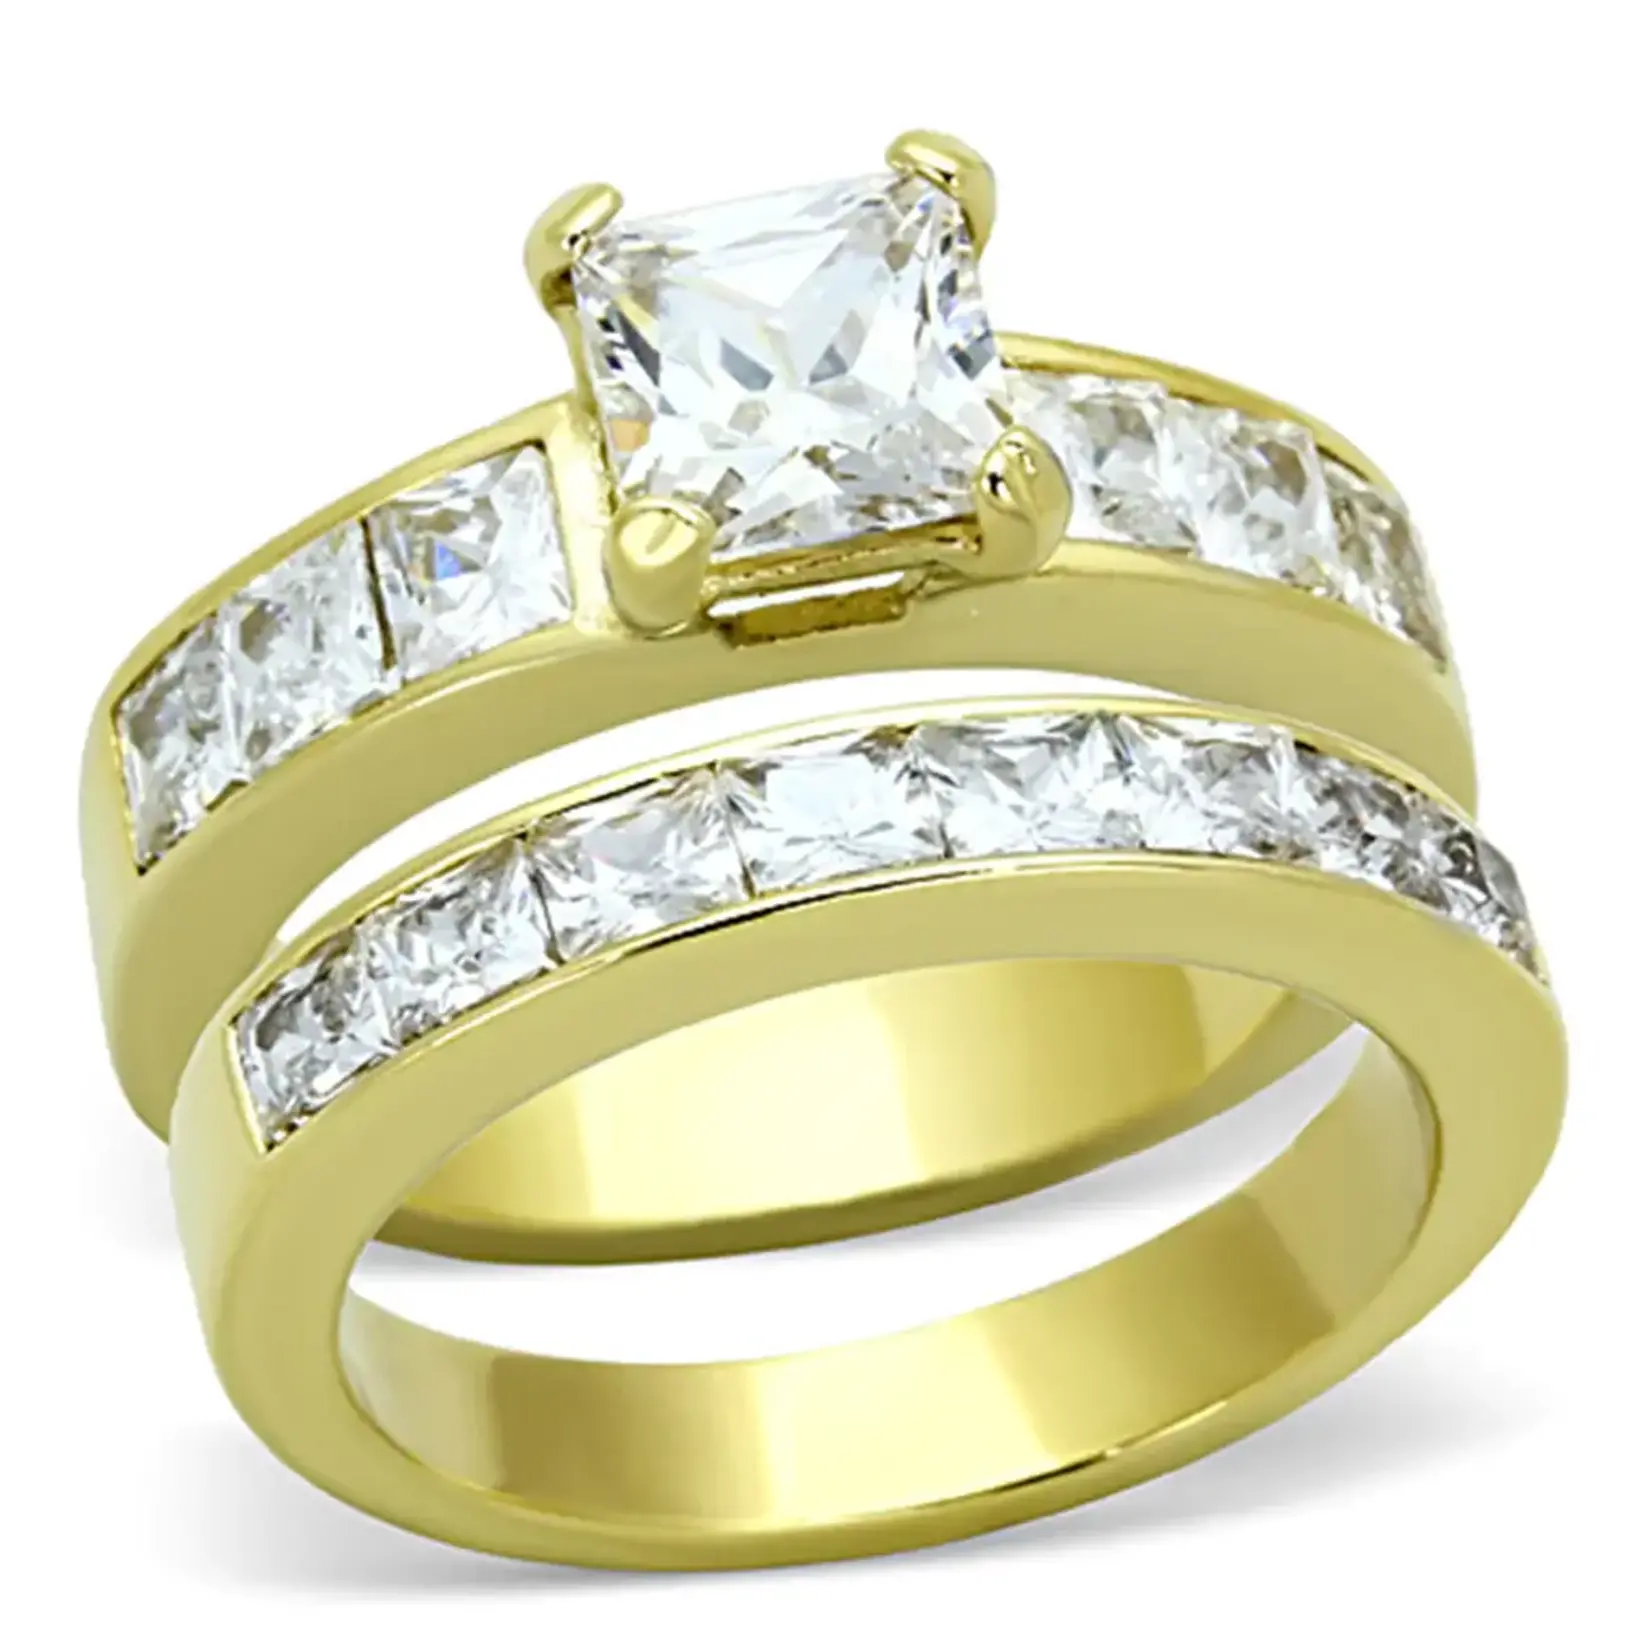 ROS Princess Channel Setting Wedding Ring Set